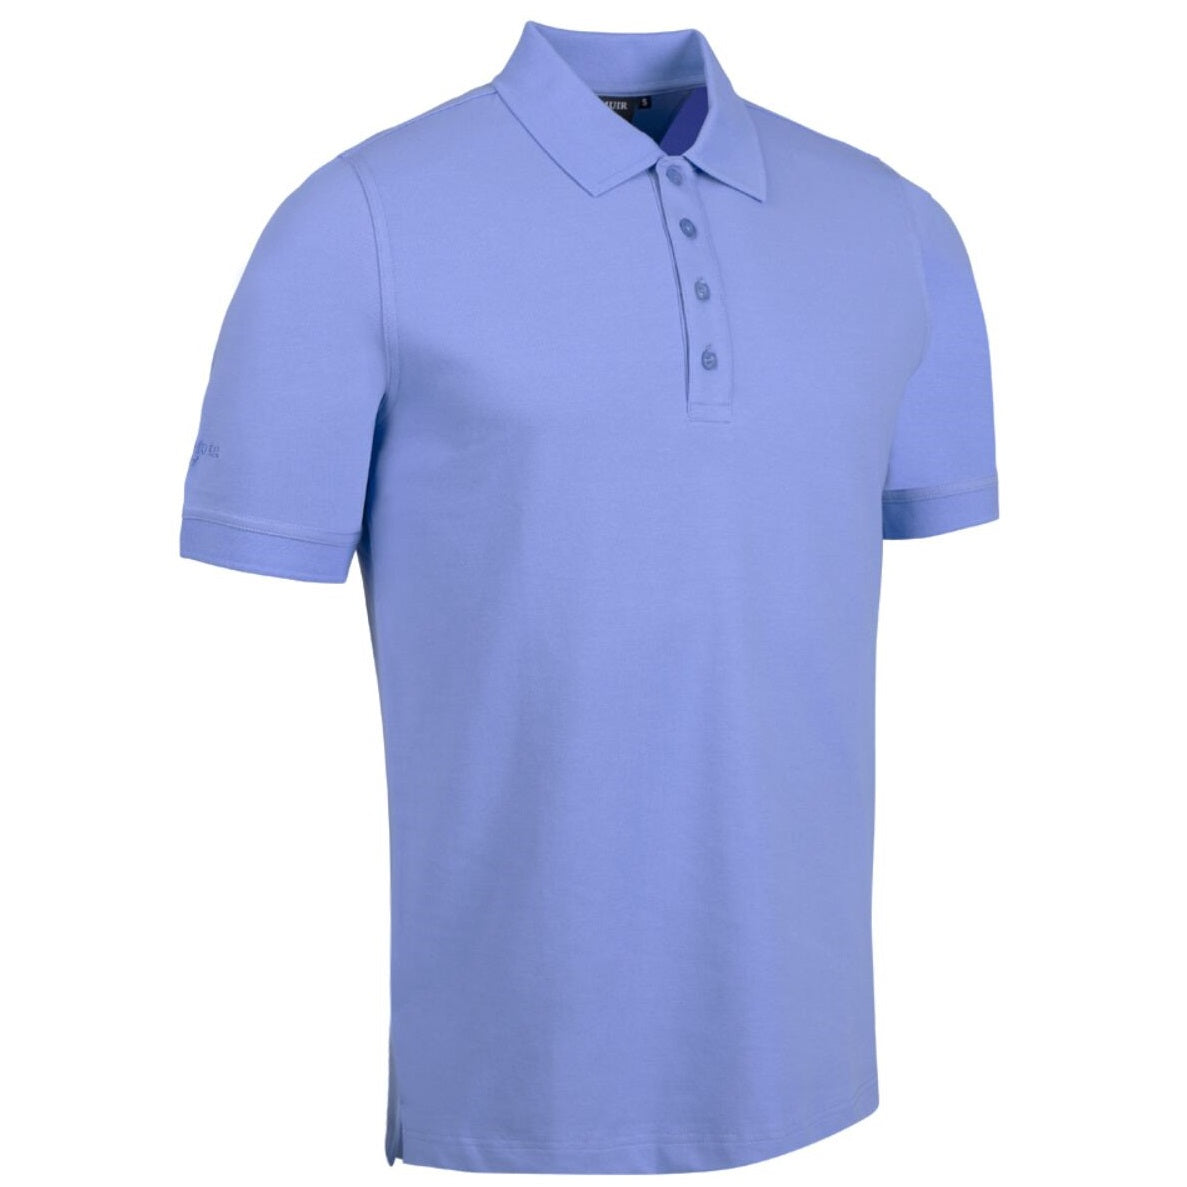 GLENMUIR Kinloch Cotton Pique Polo Shirt - Mens - Light Blue